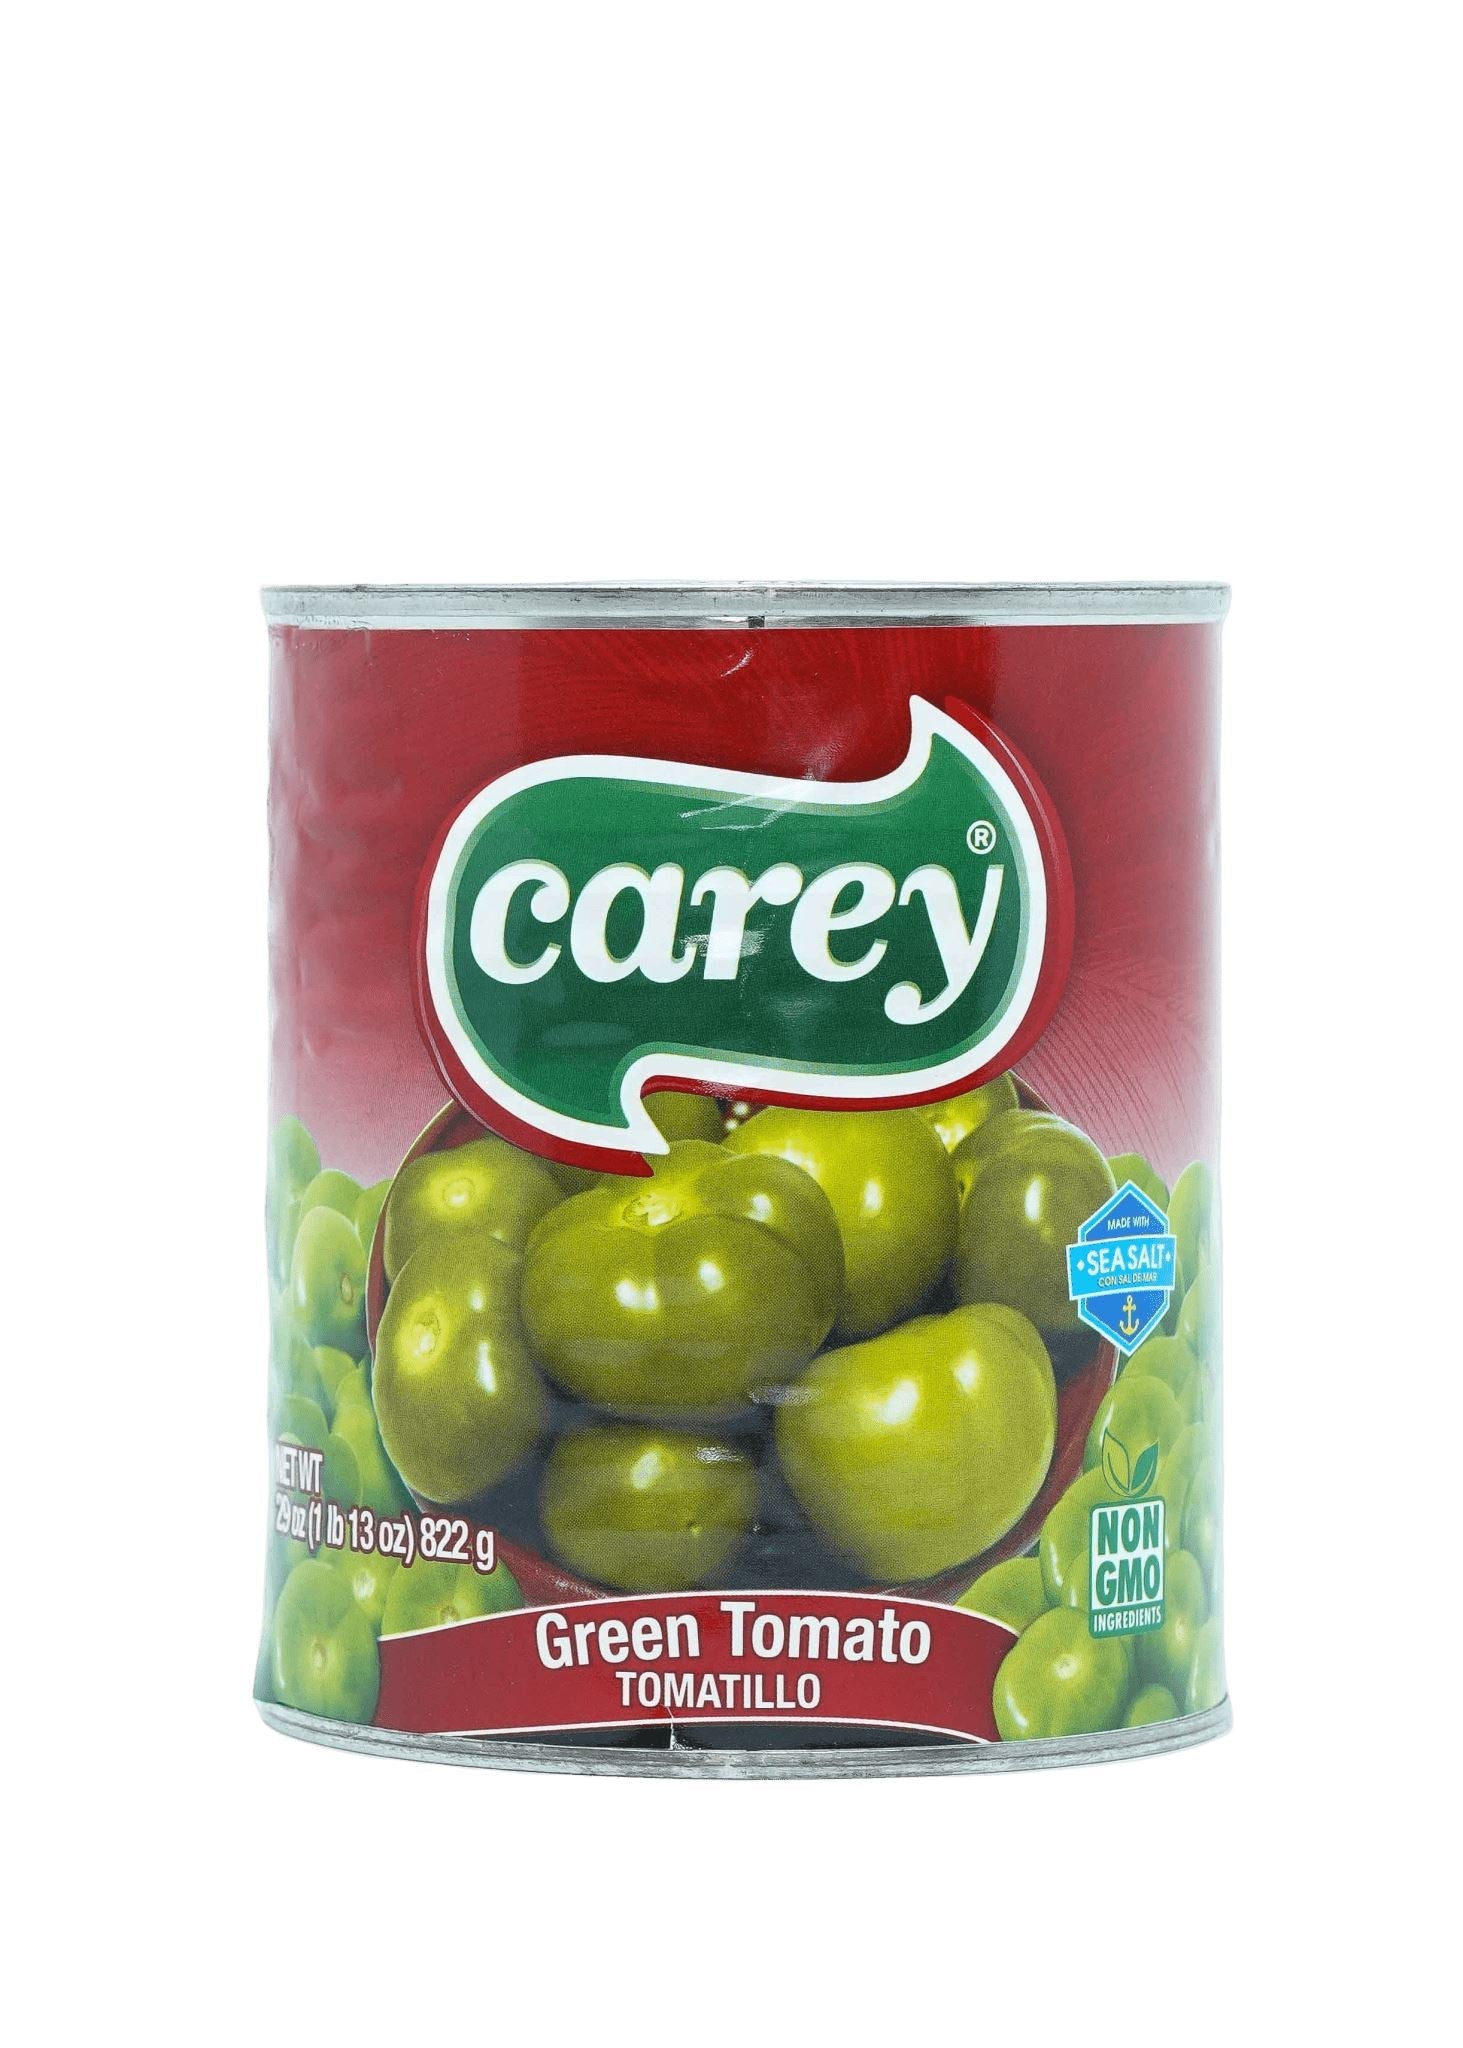 Carey Whole Green Tomatoes (Tomatillos) 340g / 800g Veggies Carey 